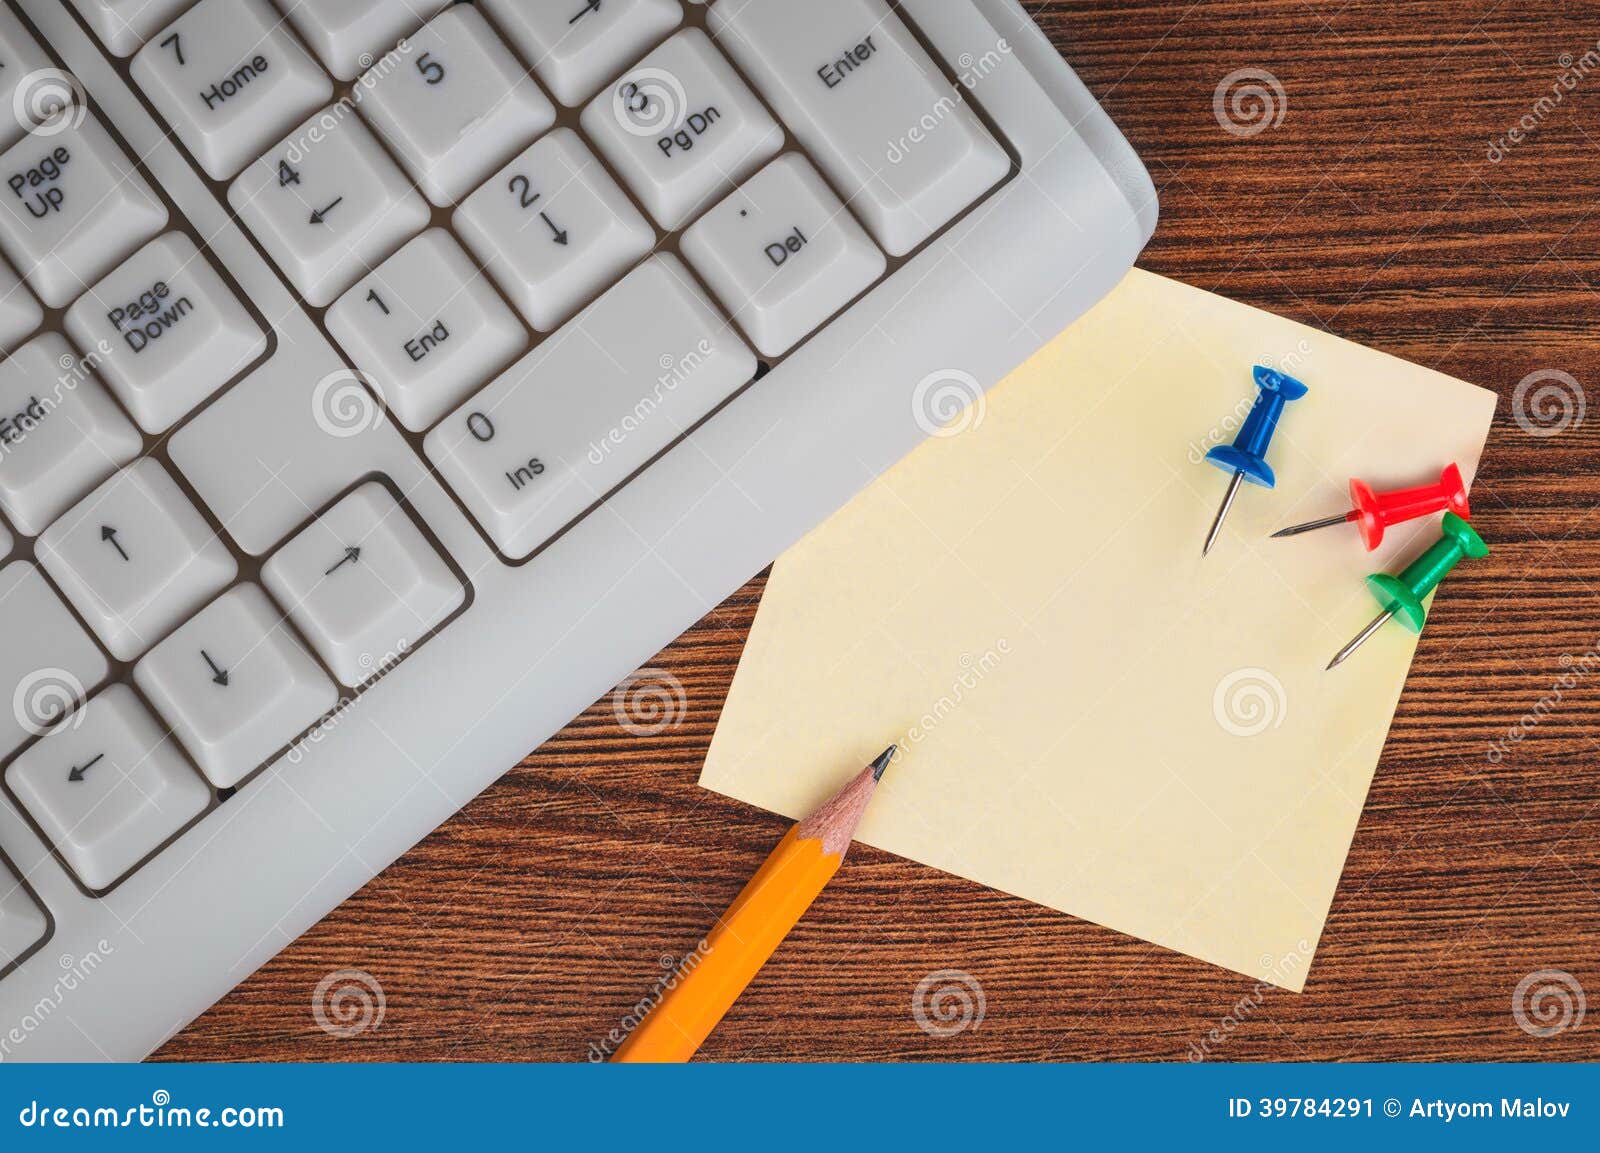 keyboard pencil sticker drawing pins office desk 39784291